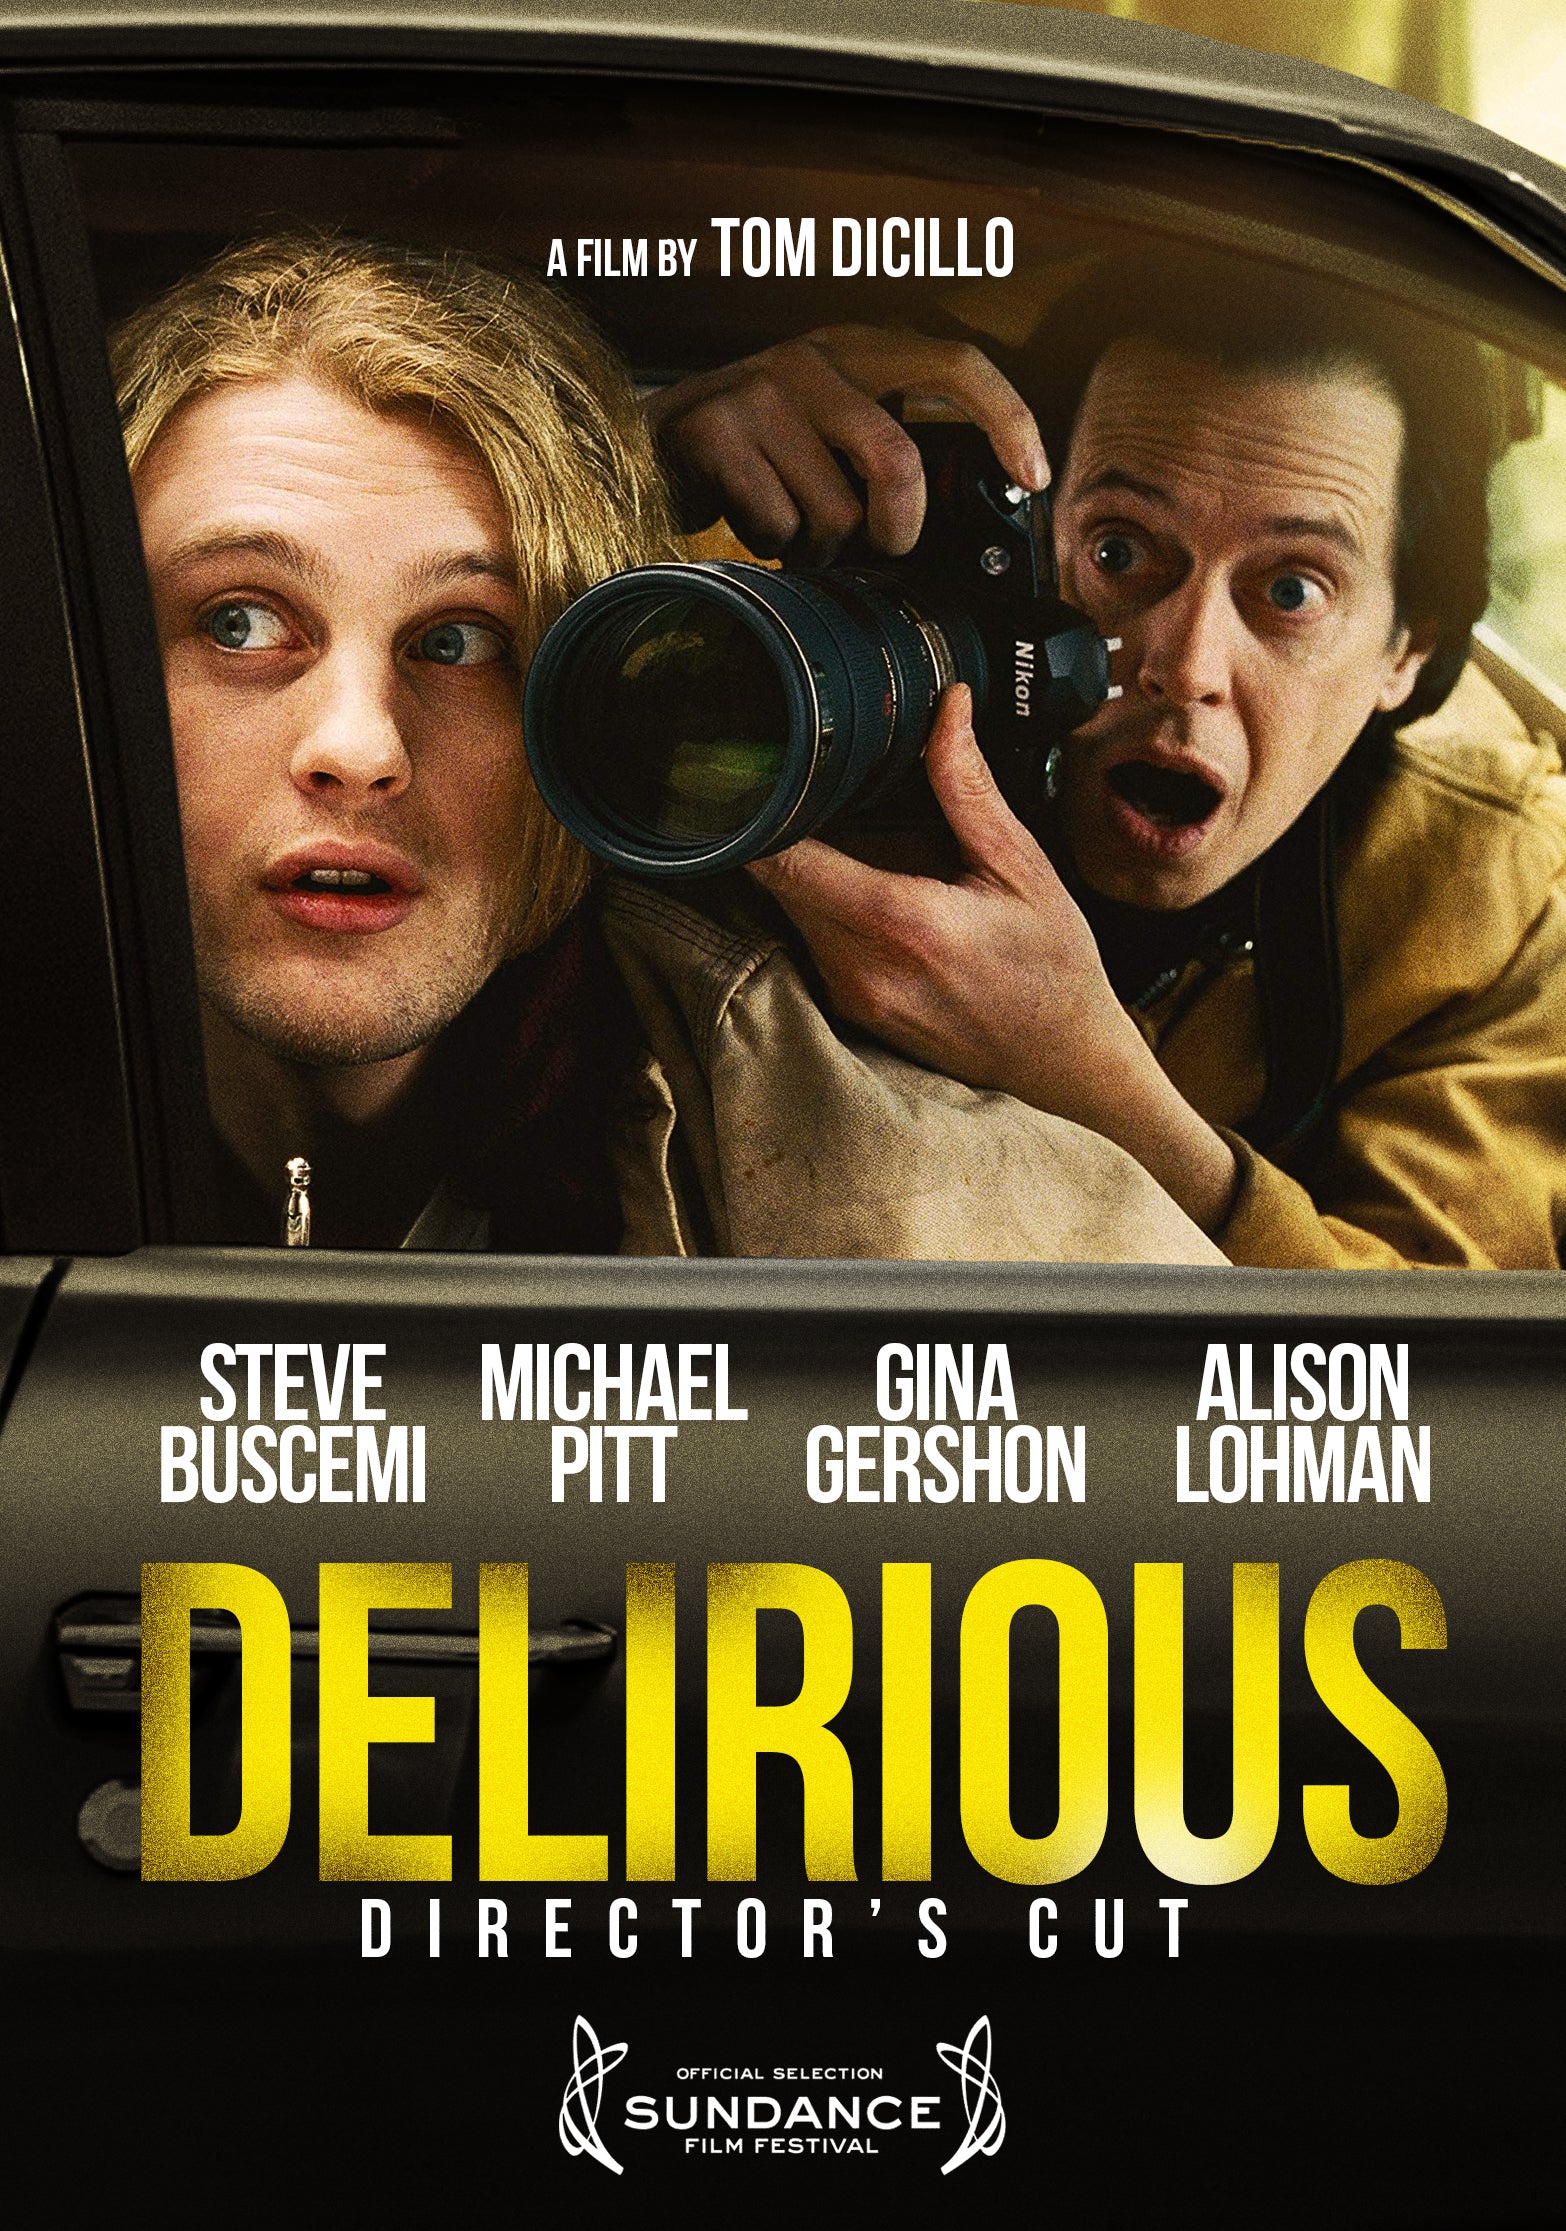 Delirious [Director's Cut] cover art